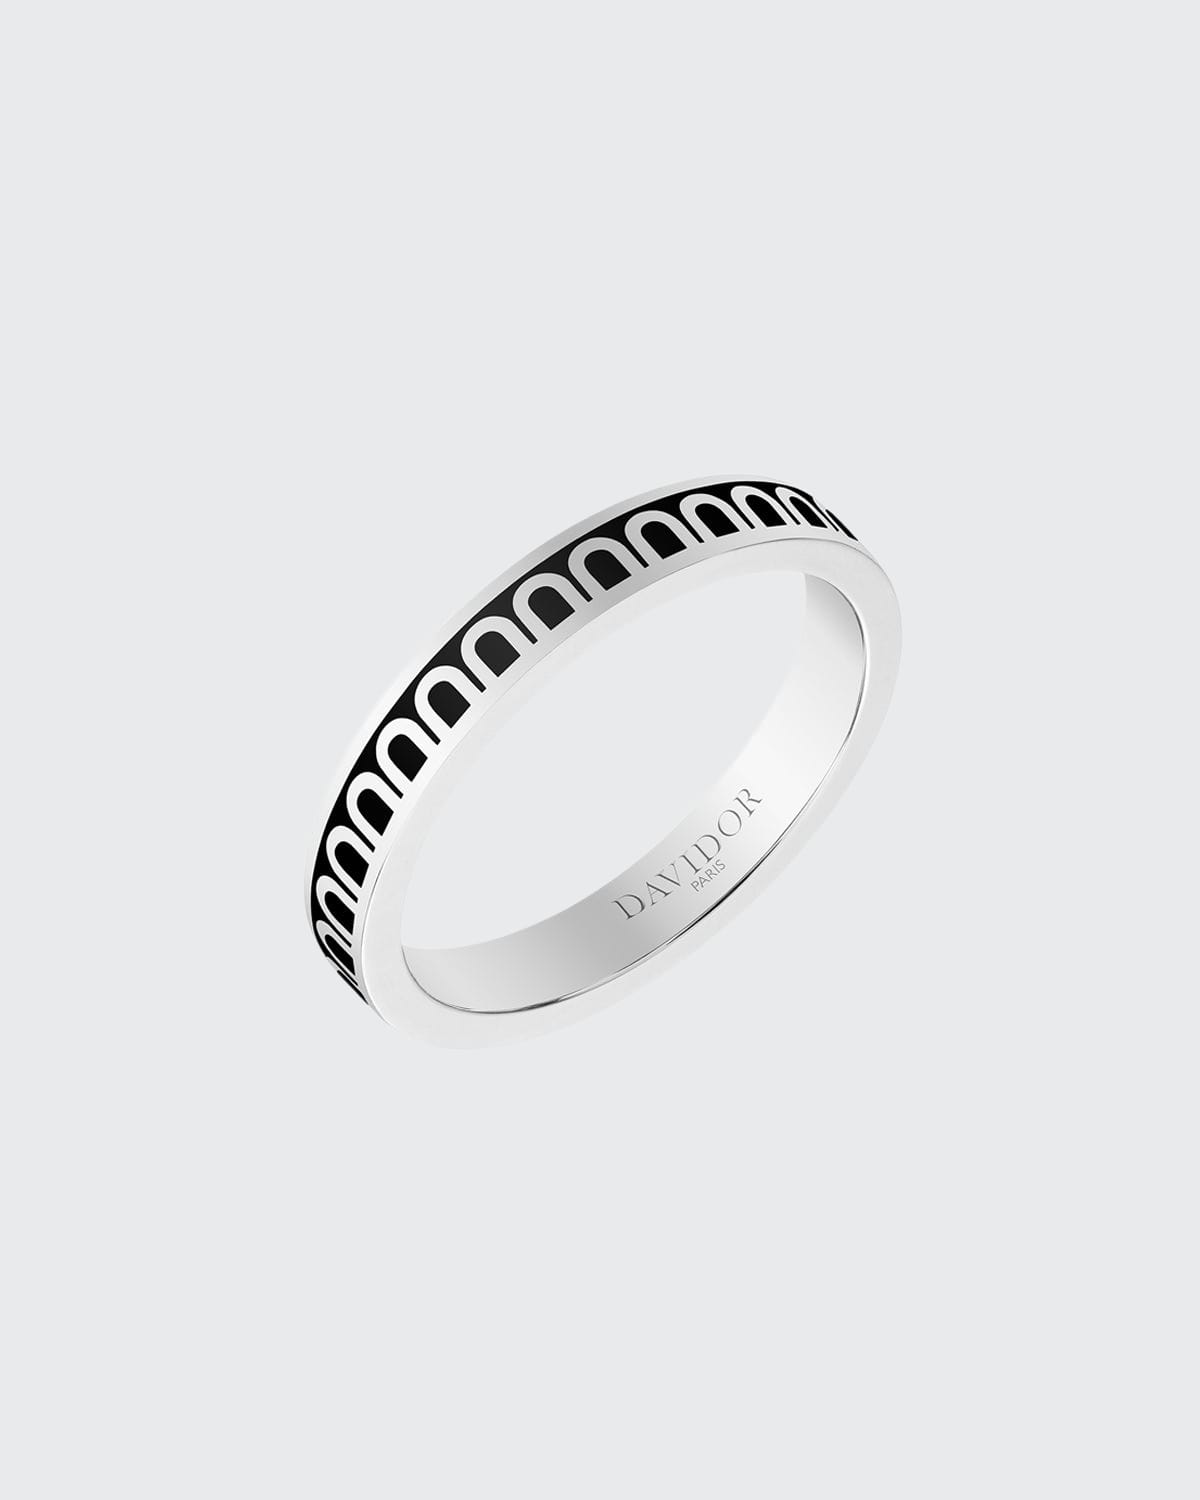 DAVIDOR L'Arc de Davidor 18k White Gold Ring - Petite Model, Caviar, Sz. 6.5